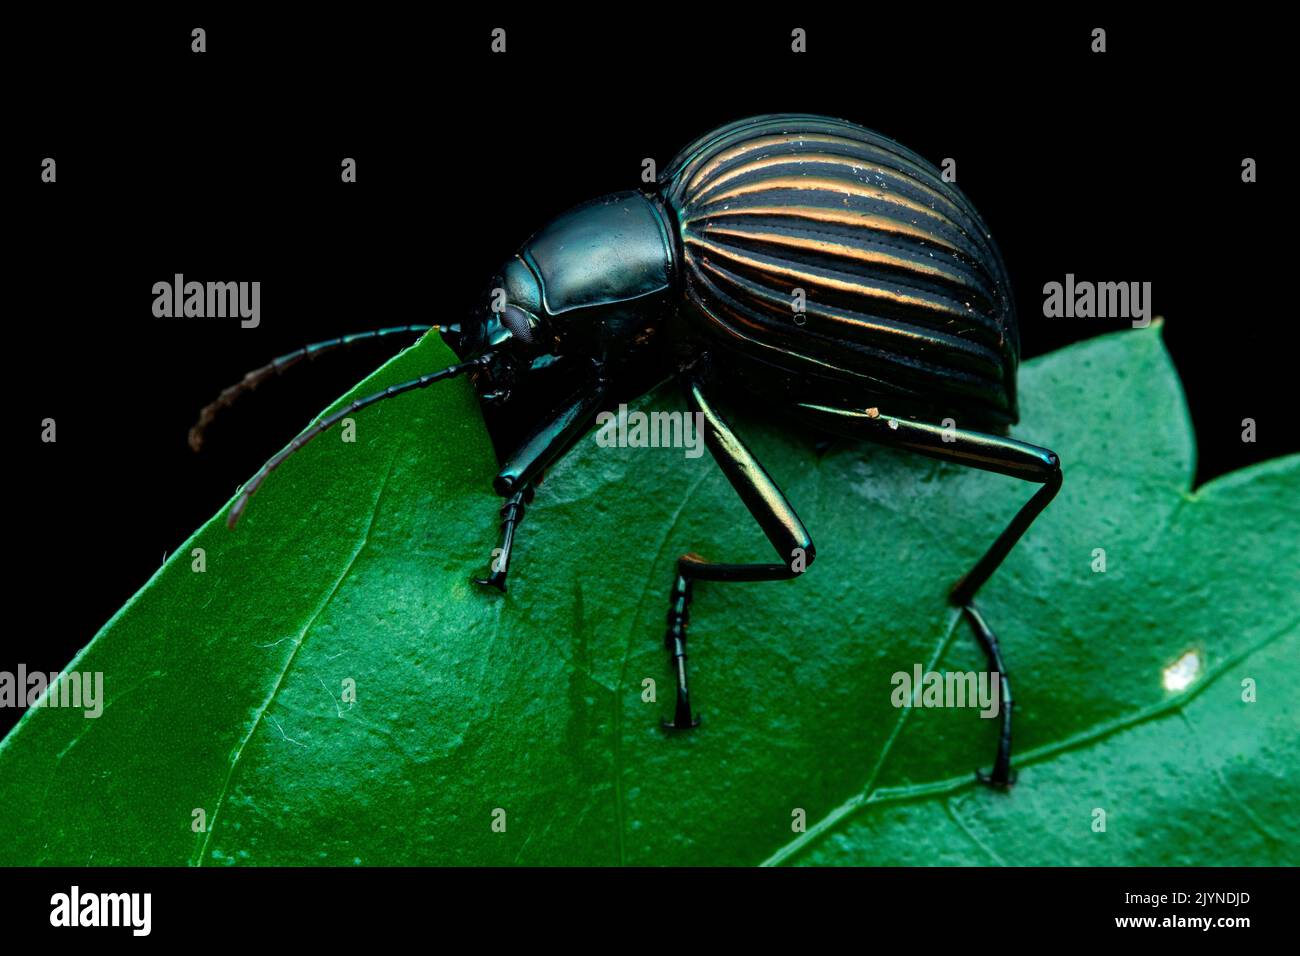 Filibuster beetle (Hegemona flibuster) on a leaf, Carate, Osa, Costa Rica Stock Photo